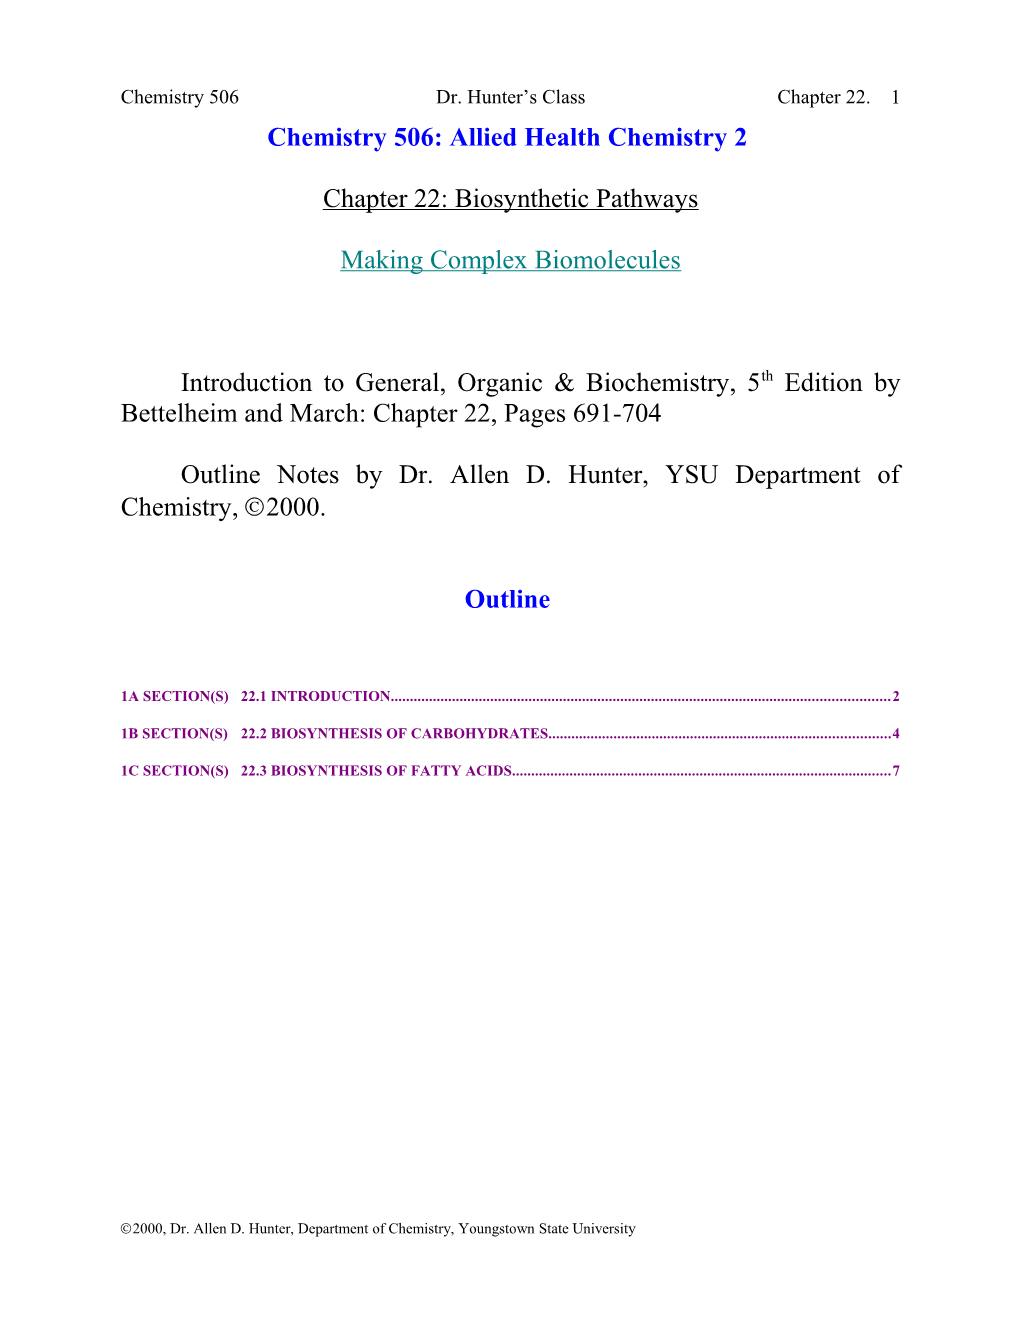 Chapter 22: Biosynthetic Pathways